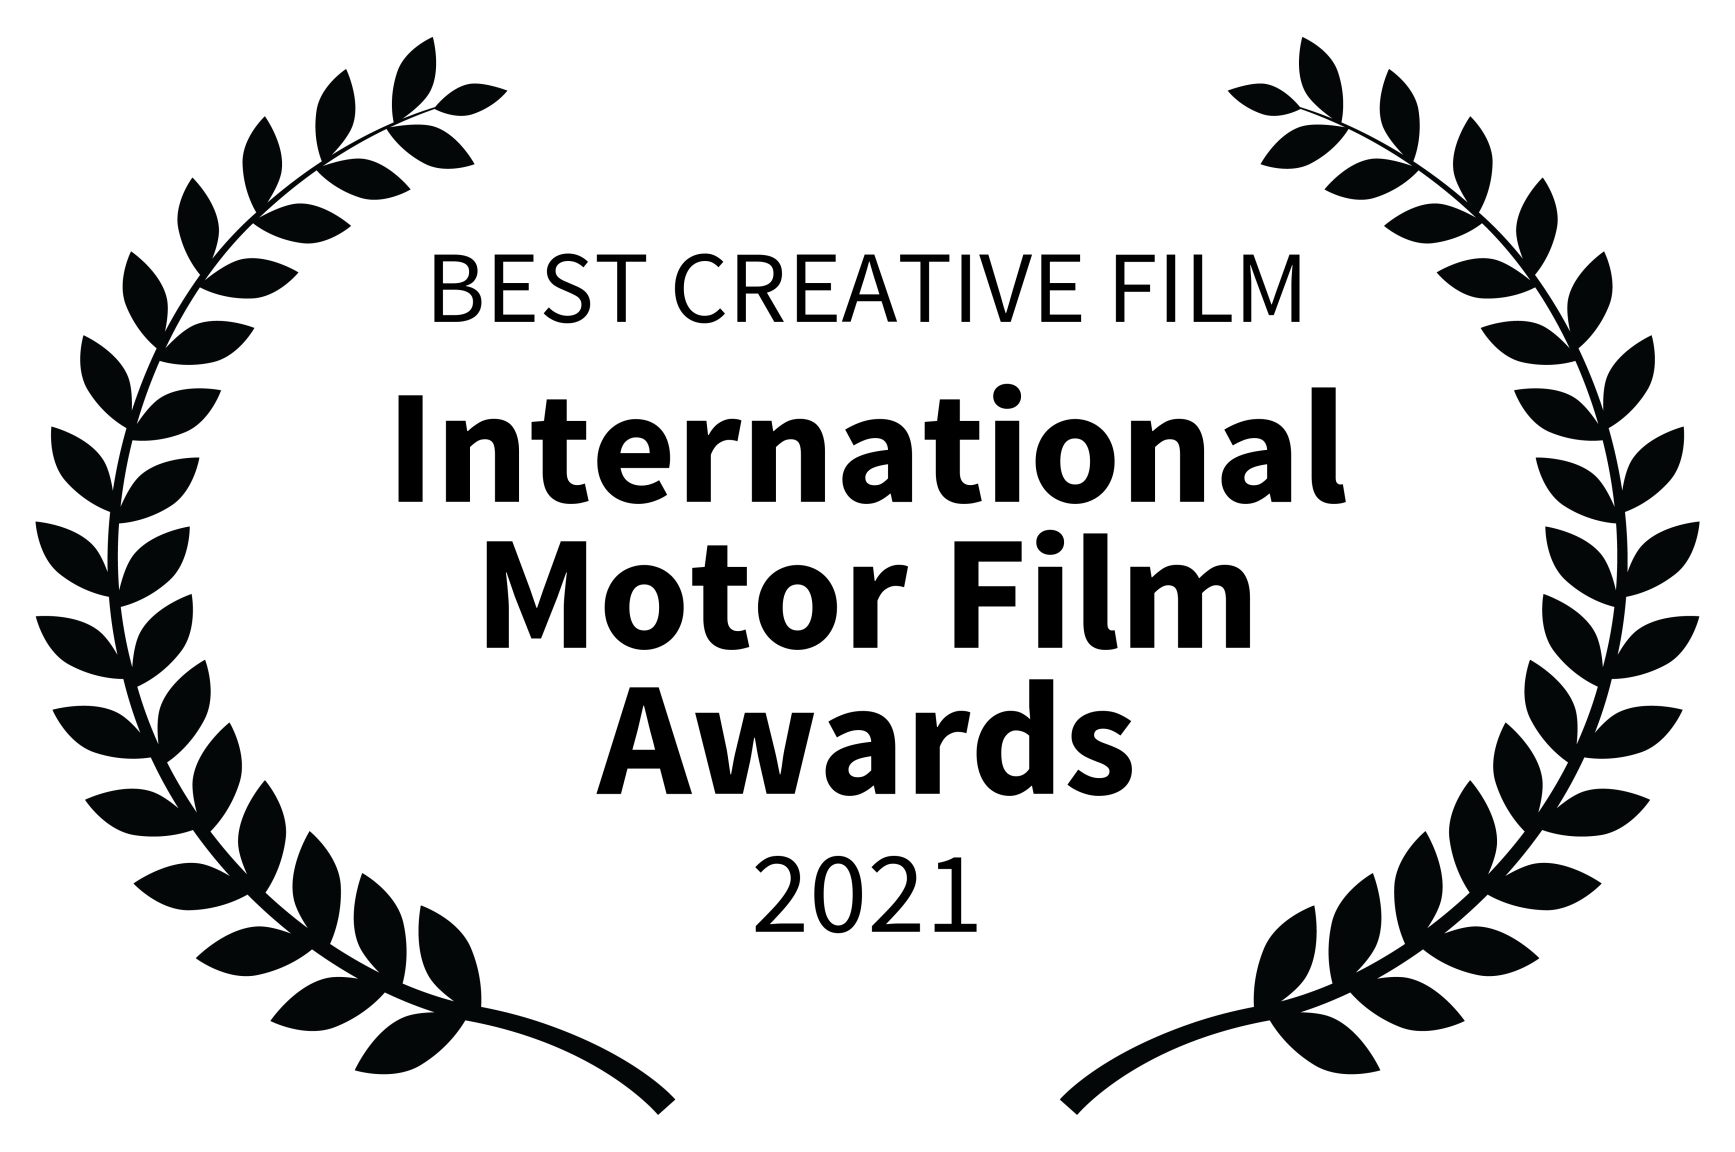 BEST-CREATIVE-FILM-International-Motor-Film-Awards-2021